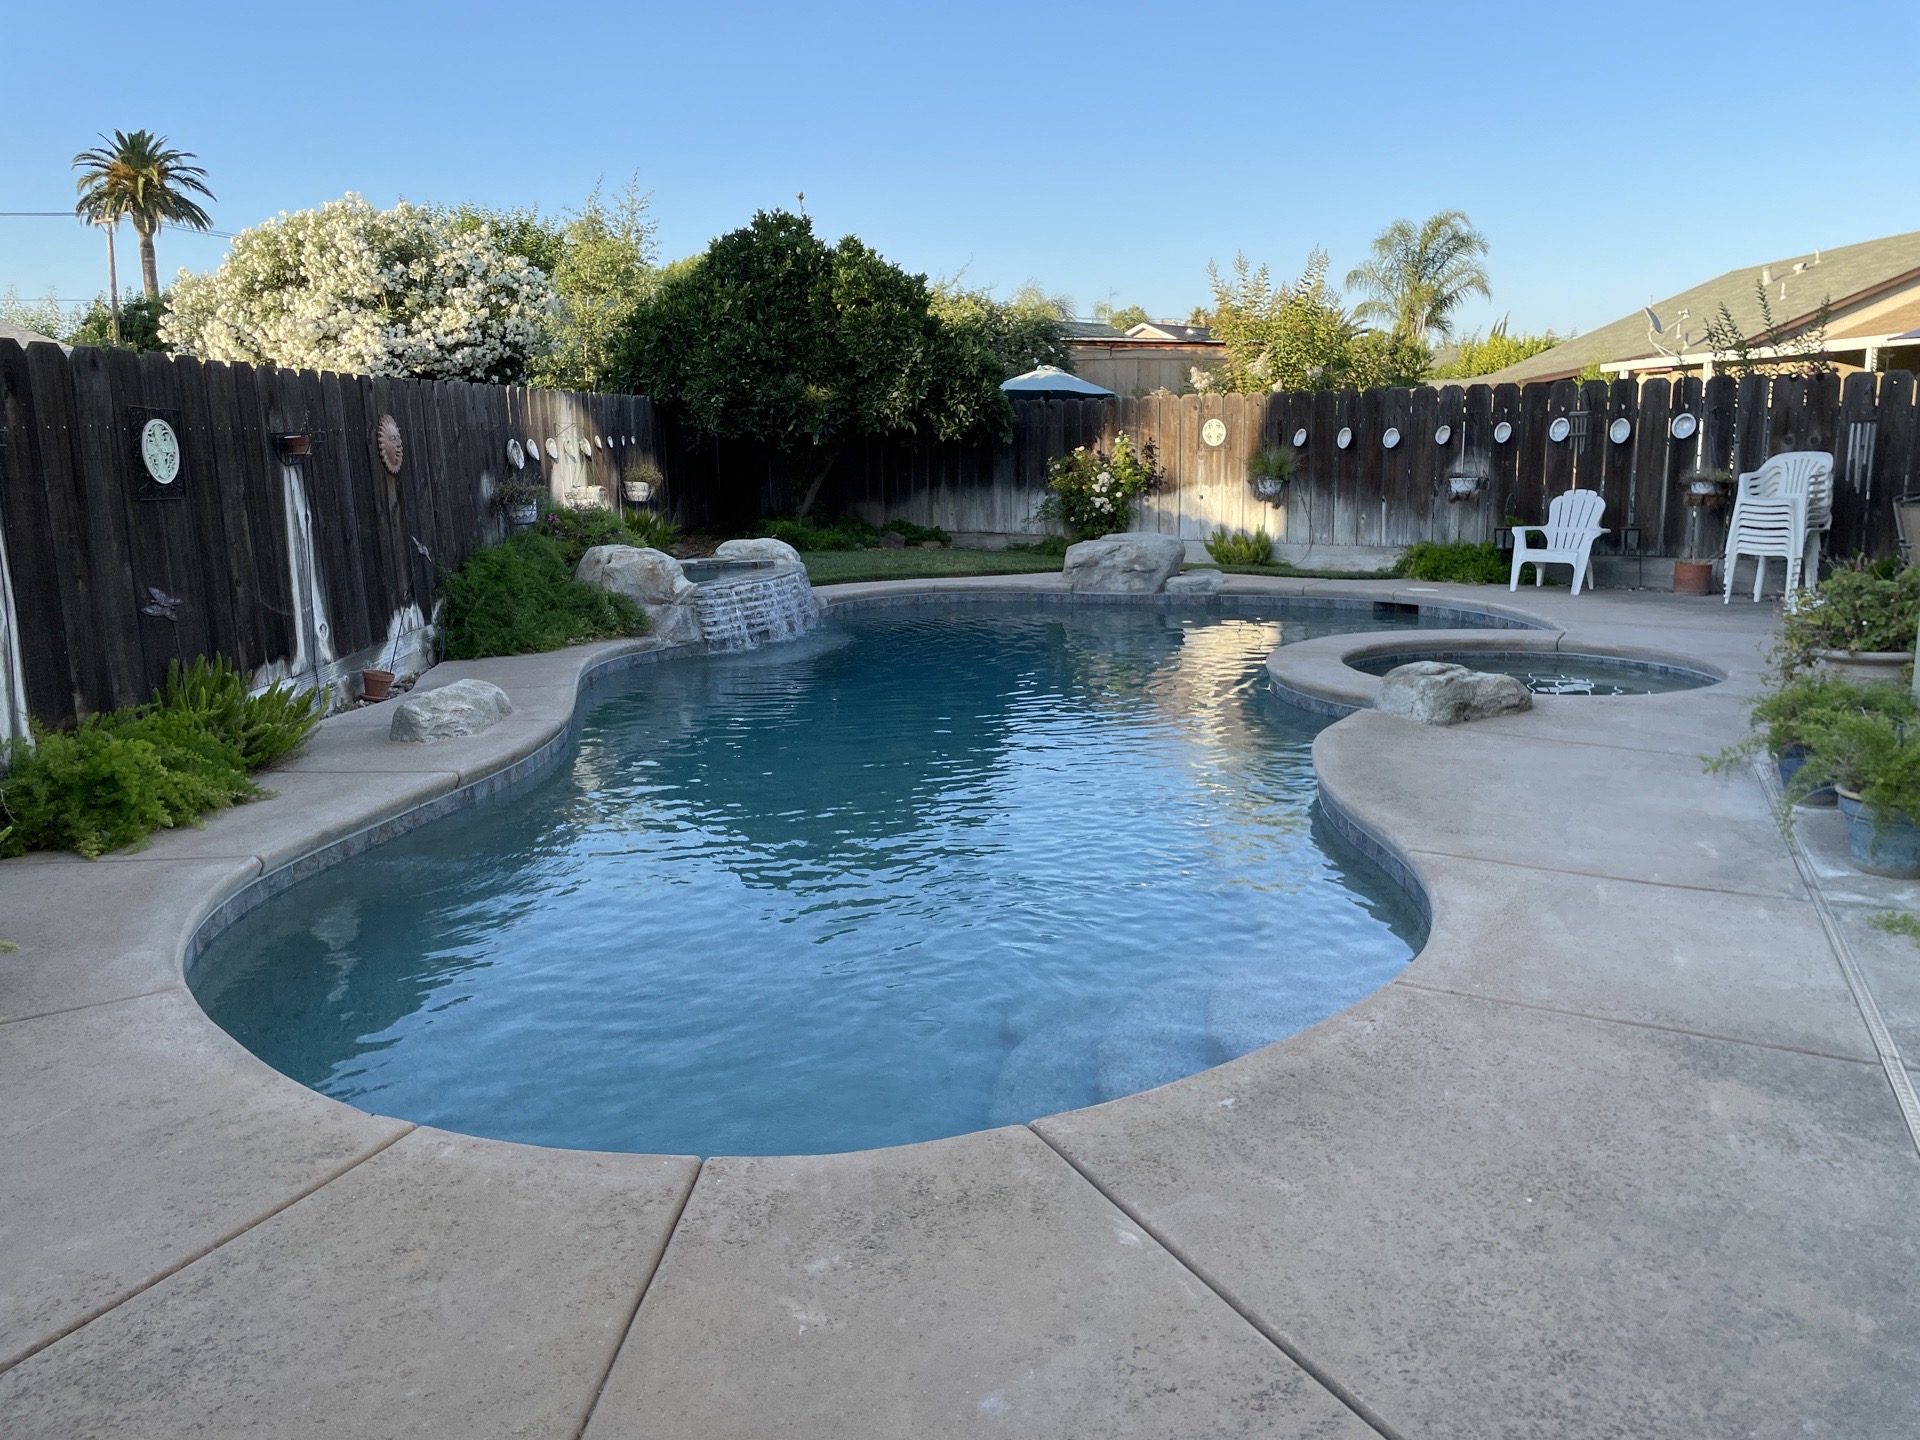 Burkett's Pool Plastering, Inc. 600 Frontage Rd, Ripon California 95366